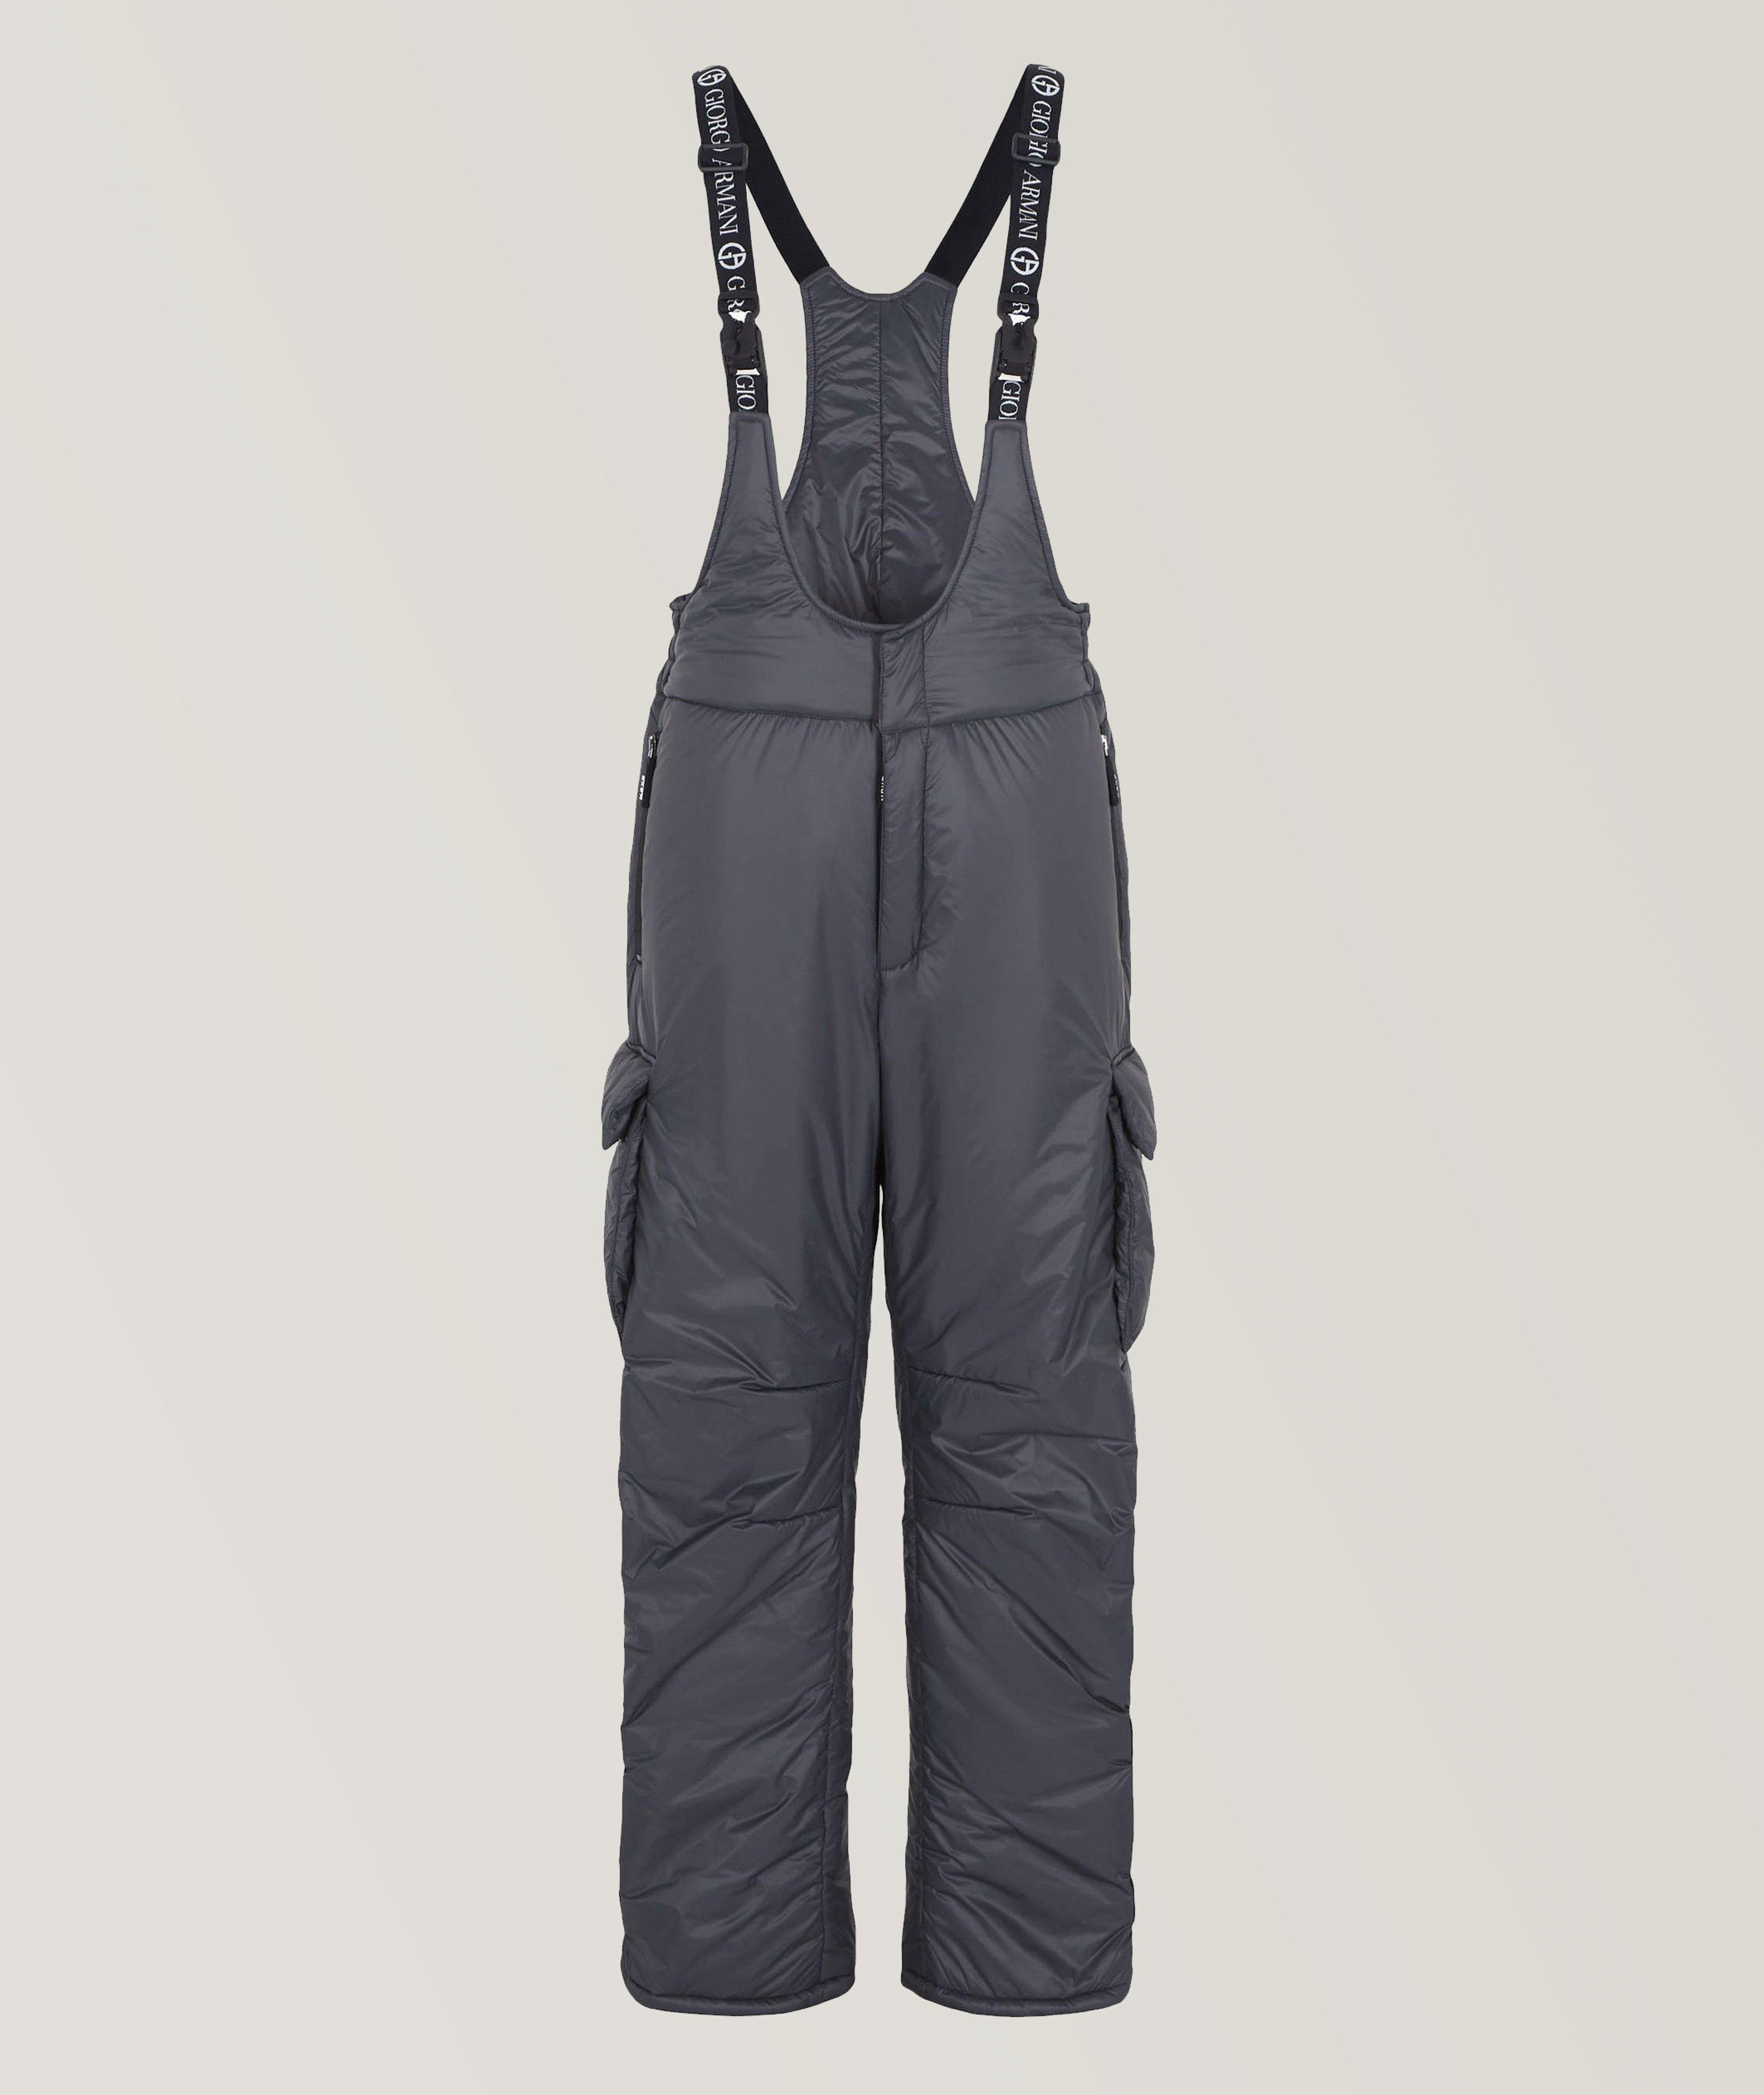 Giorgio Armani Neve Collection Water-Repellent Canvas Ski Pants, Dress  Pants